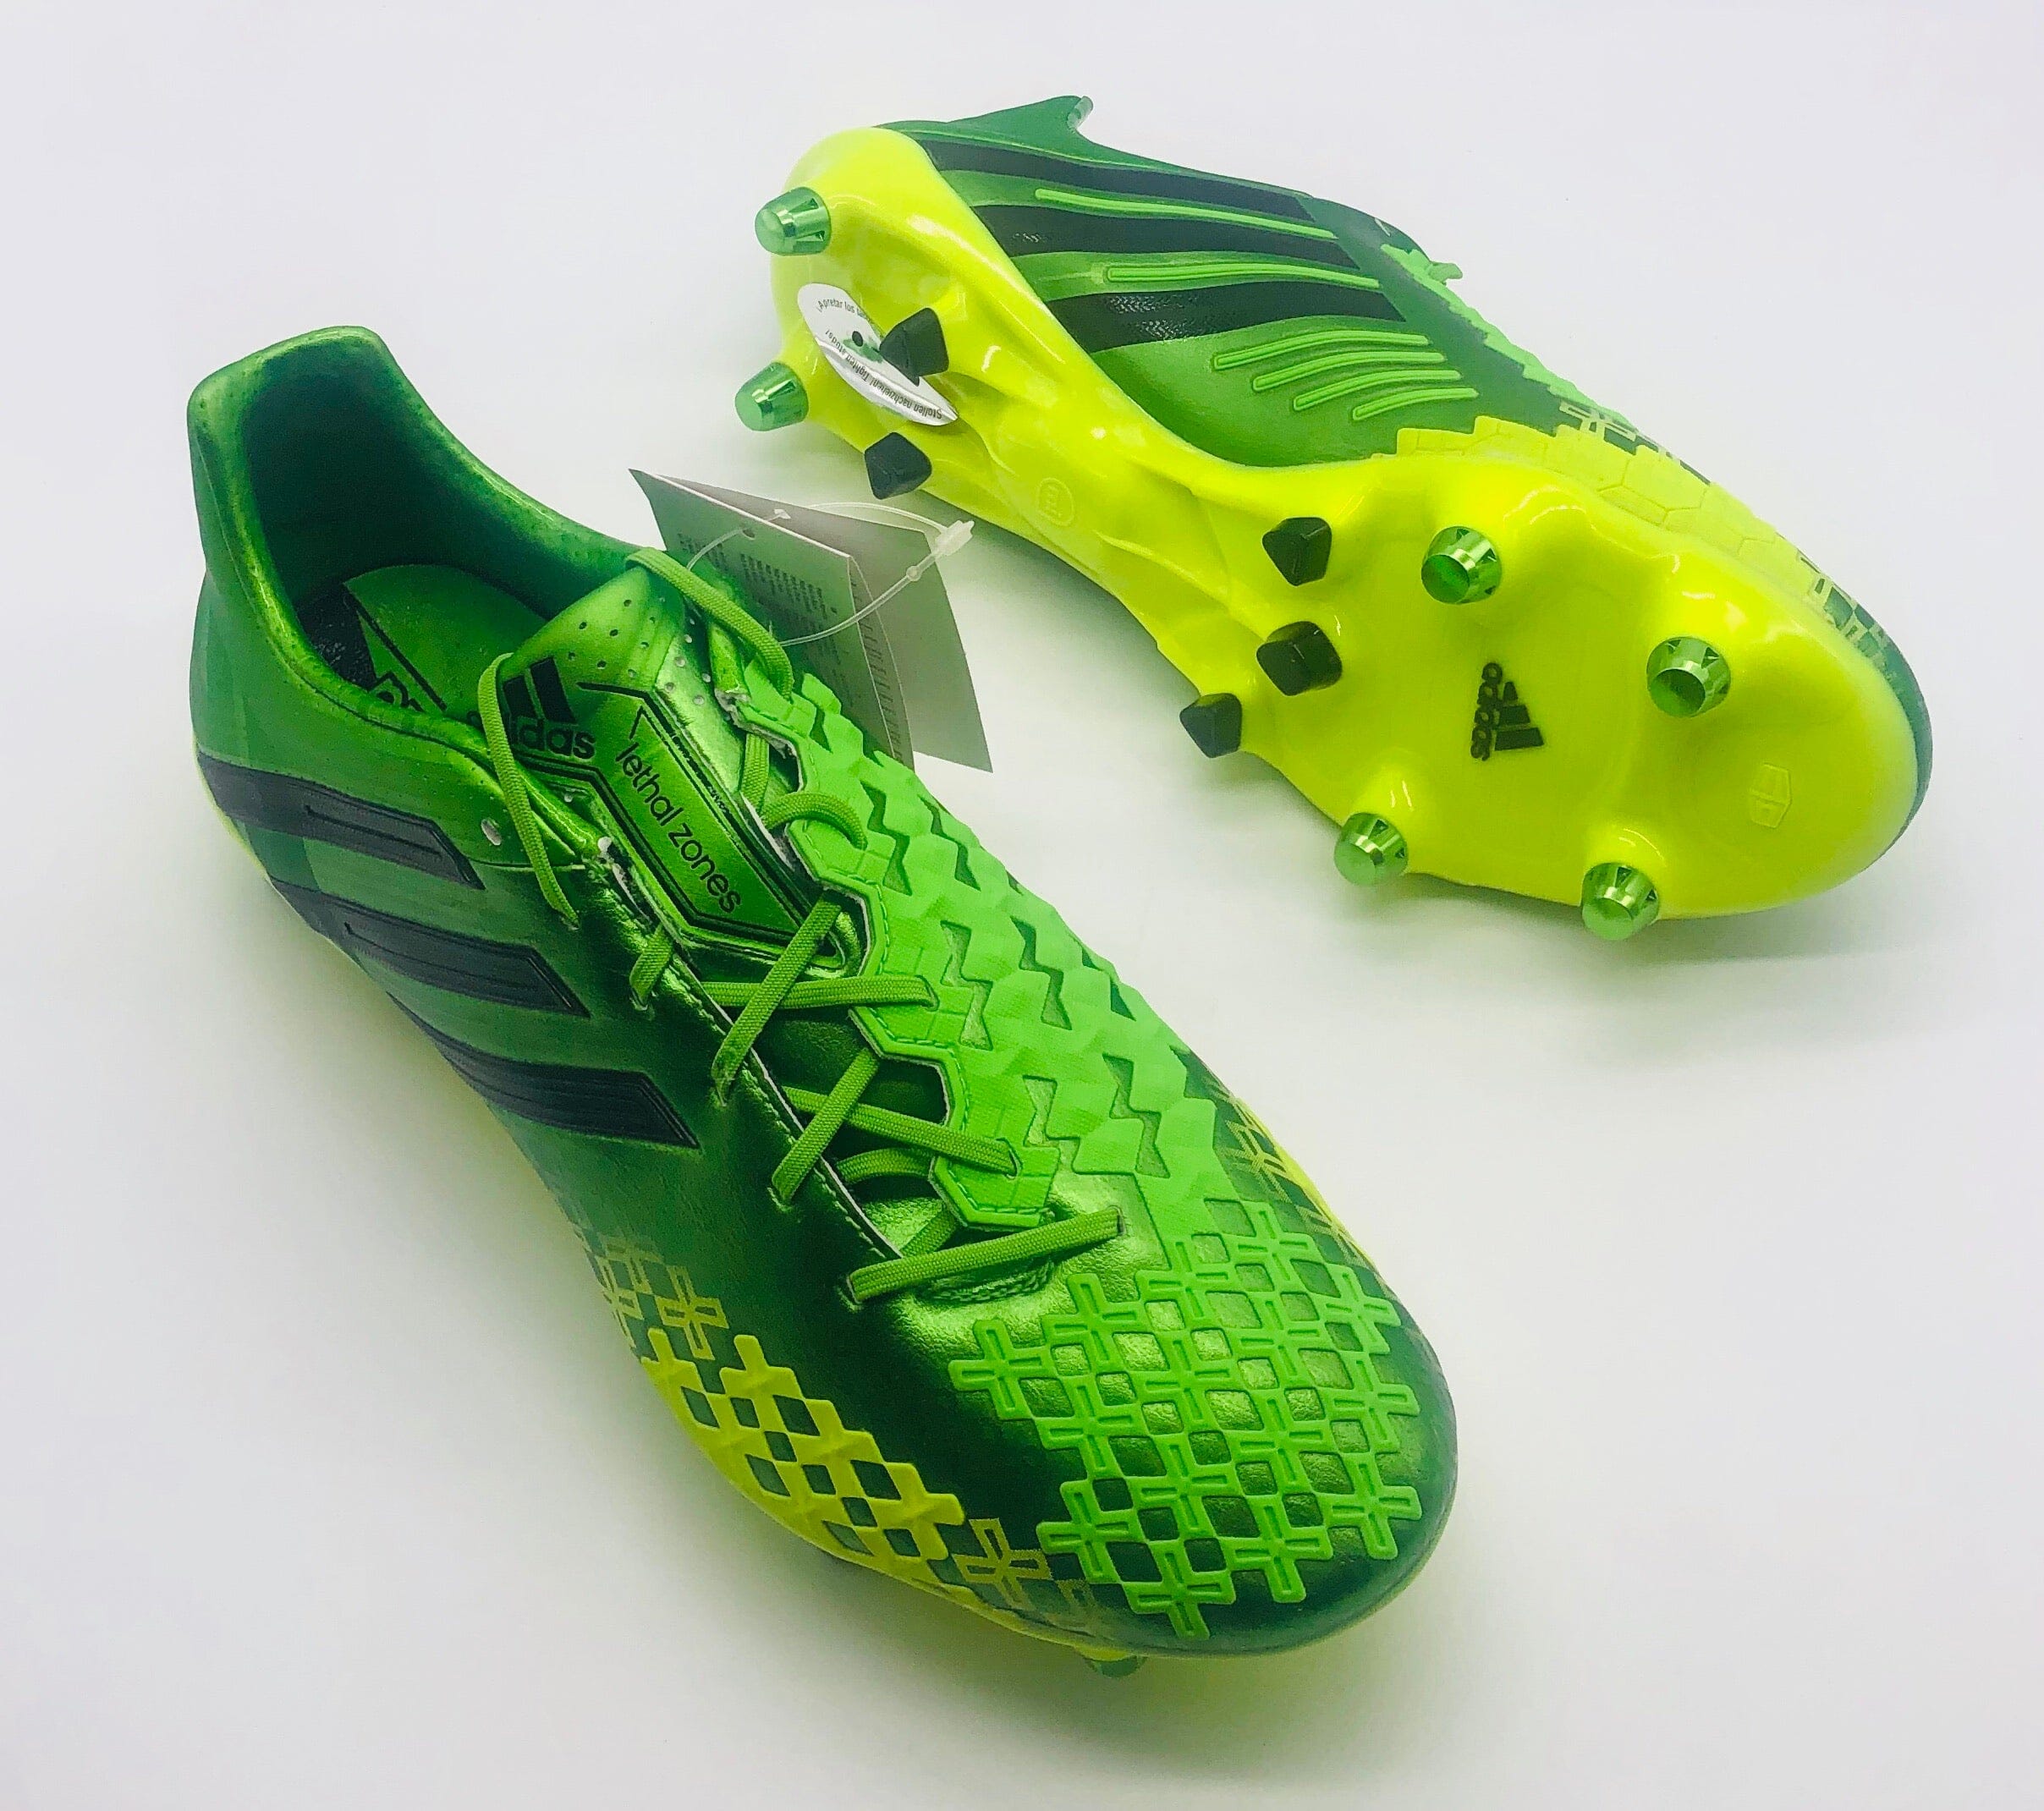 2012 adidas Predator Lethal Zones MiCoach Football Boots *In Box* FG